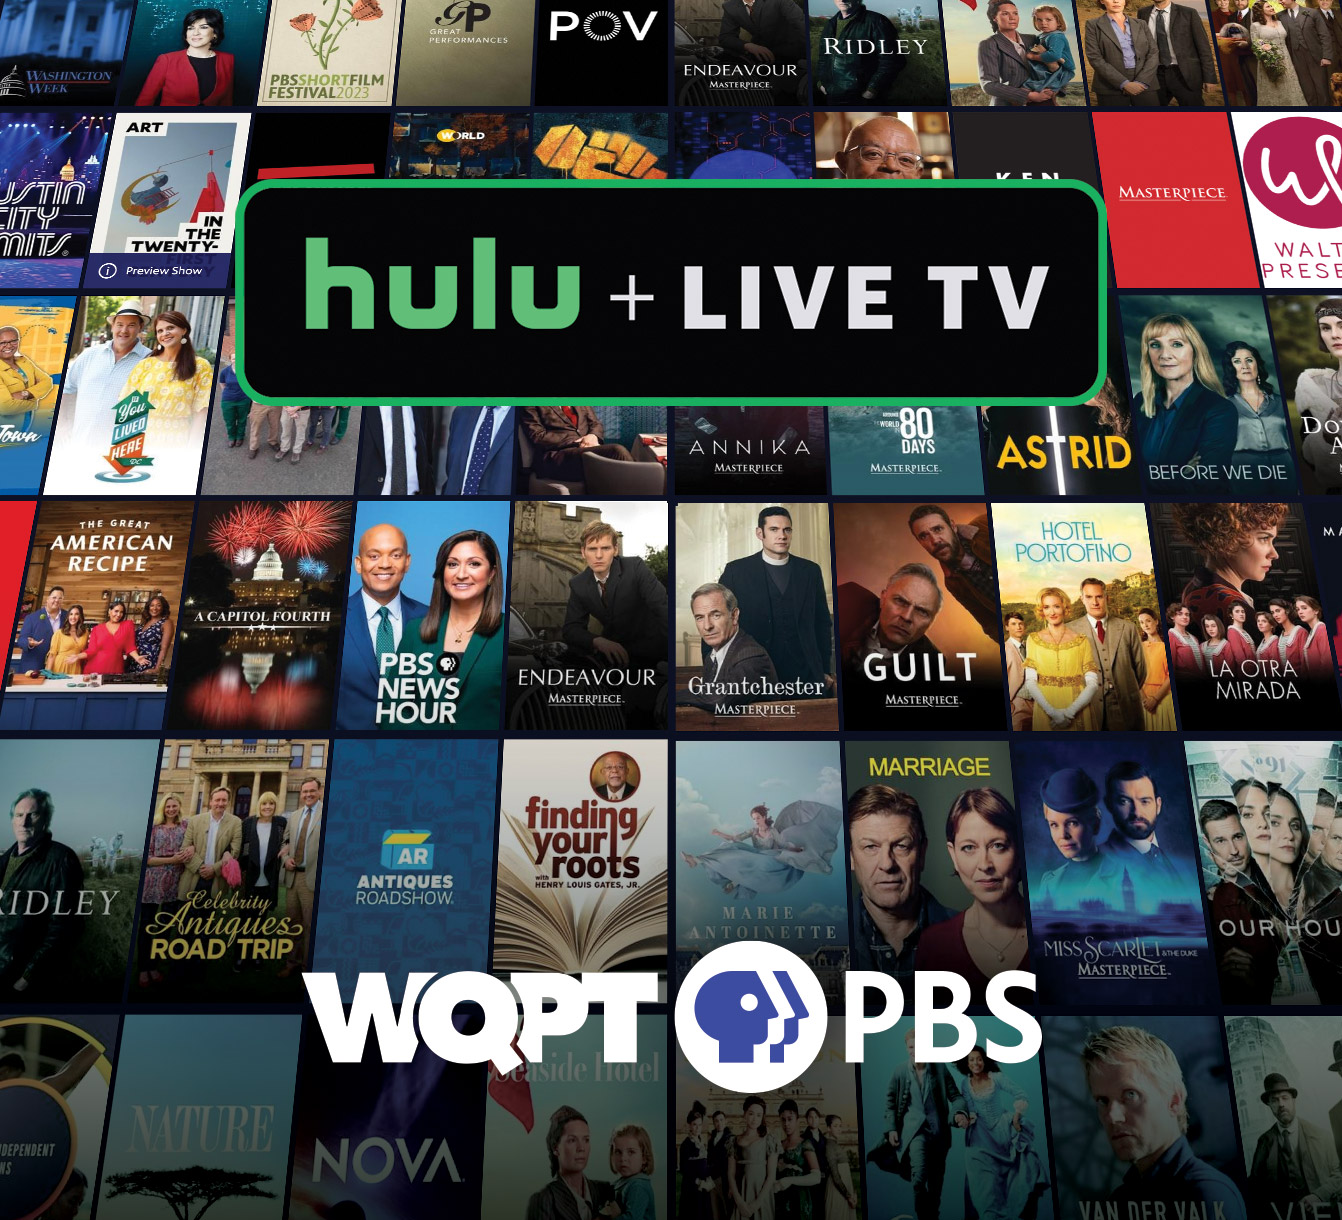 WQPT PBS is now on Hulu